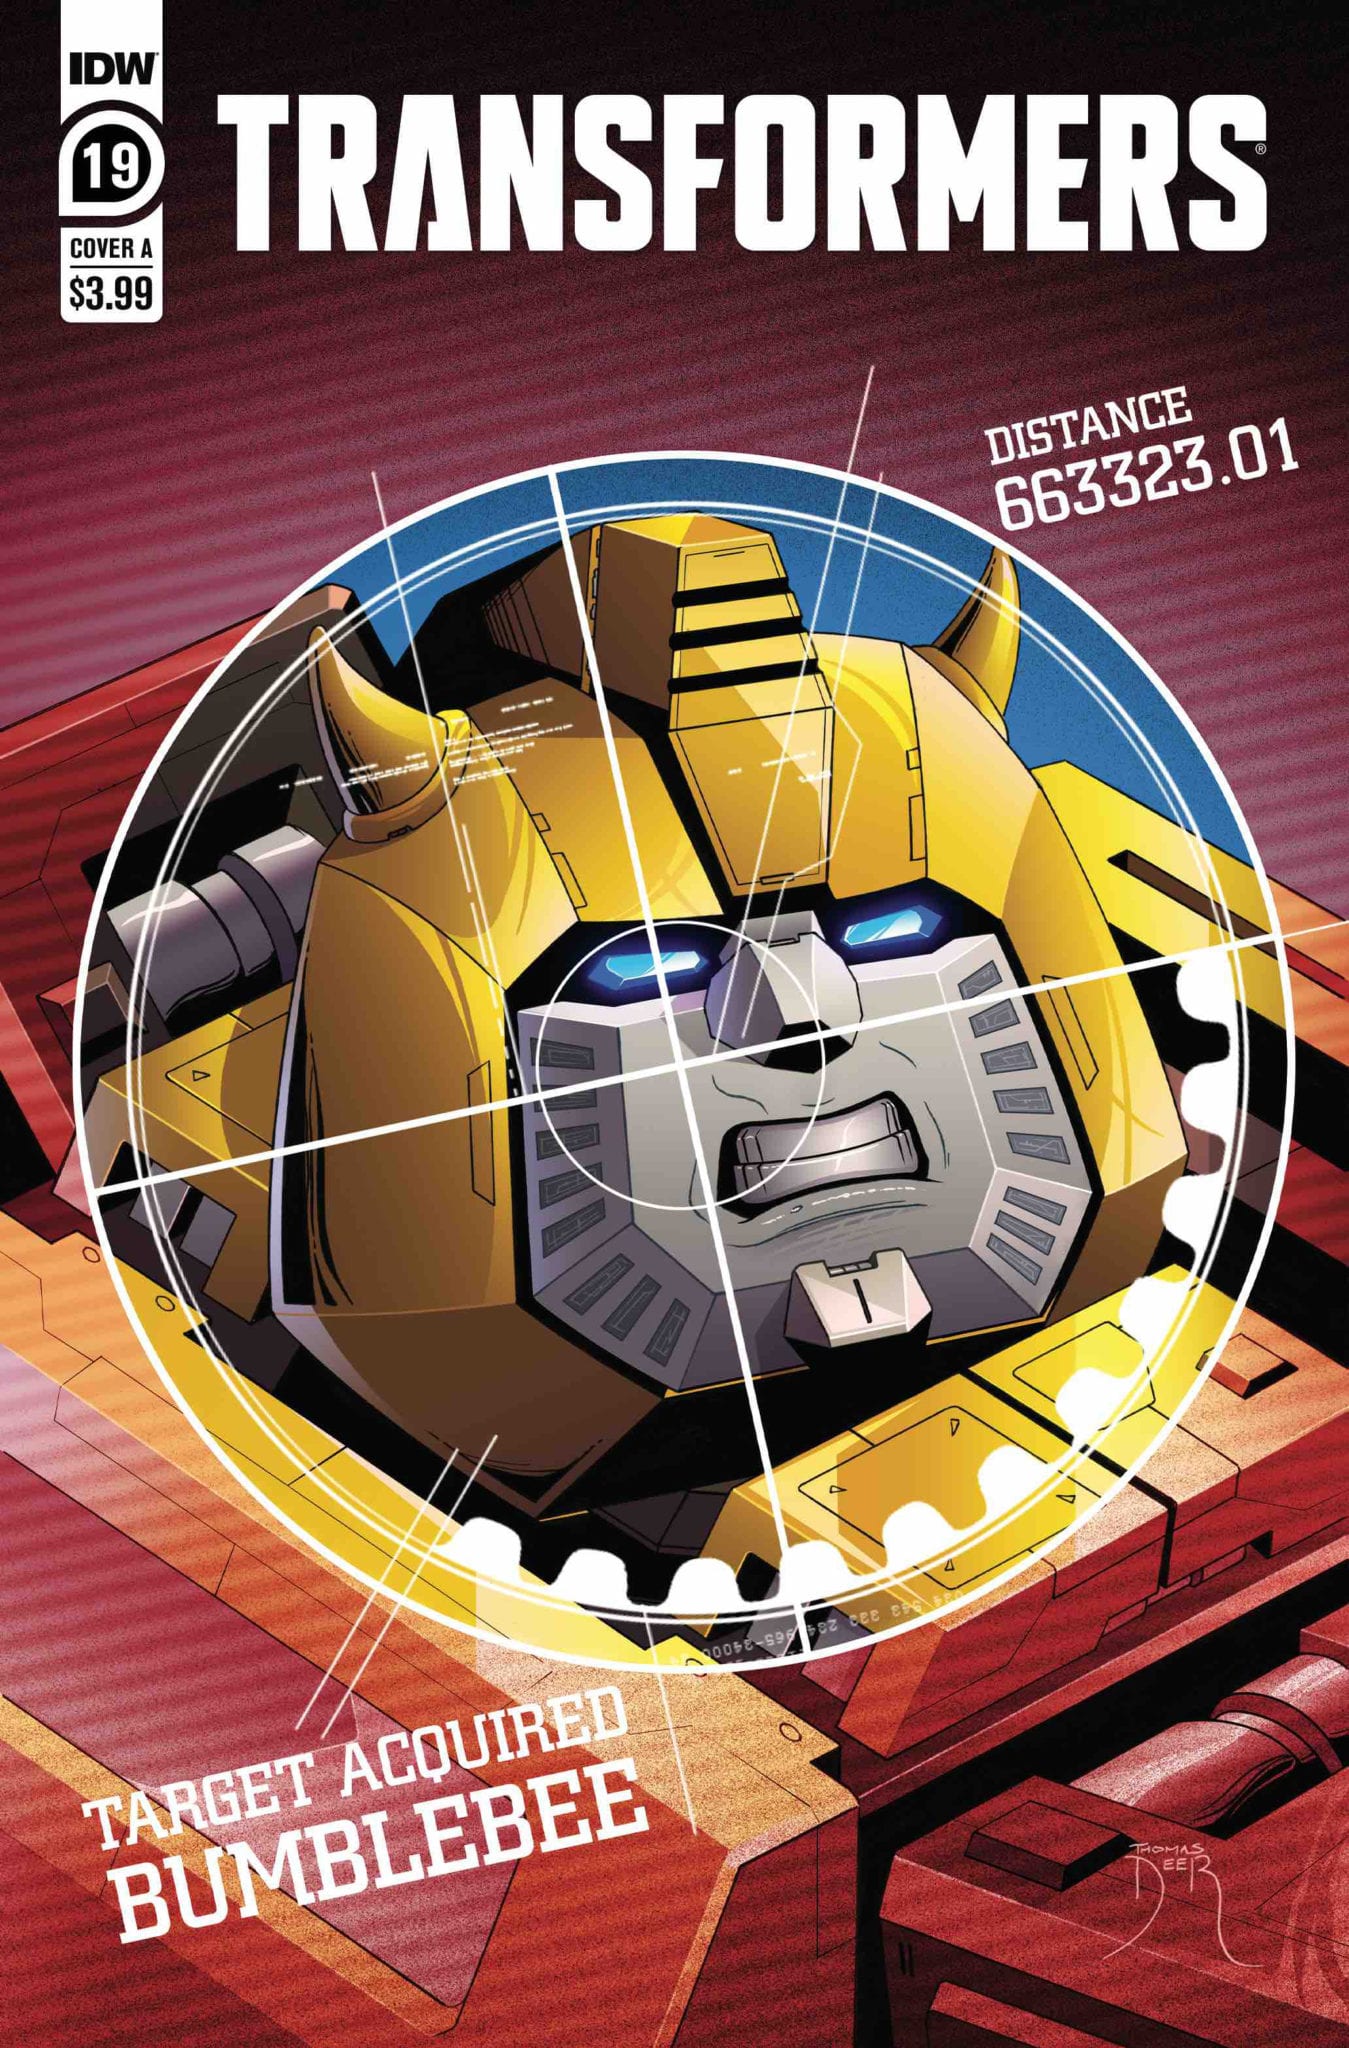 Transformers-19a